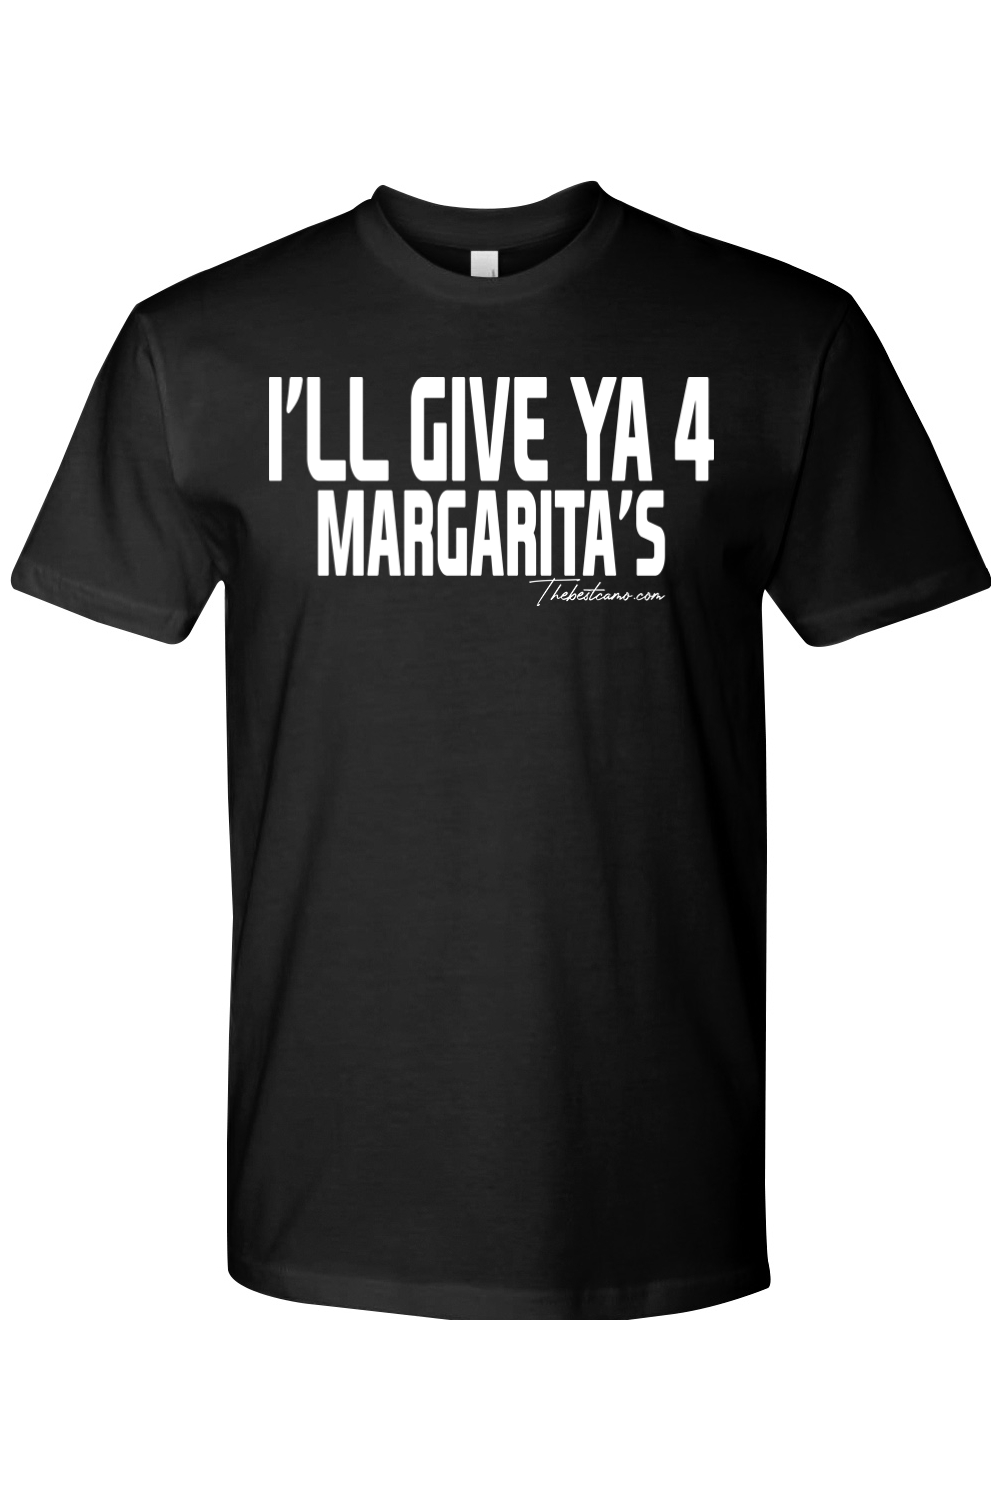 ill give ya 4 margaritas